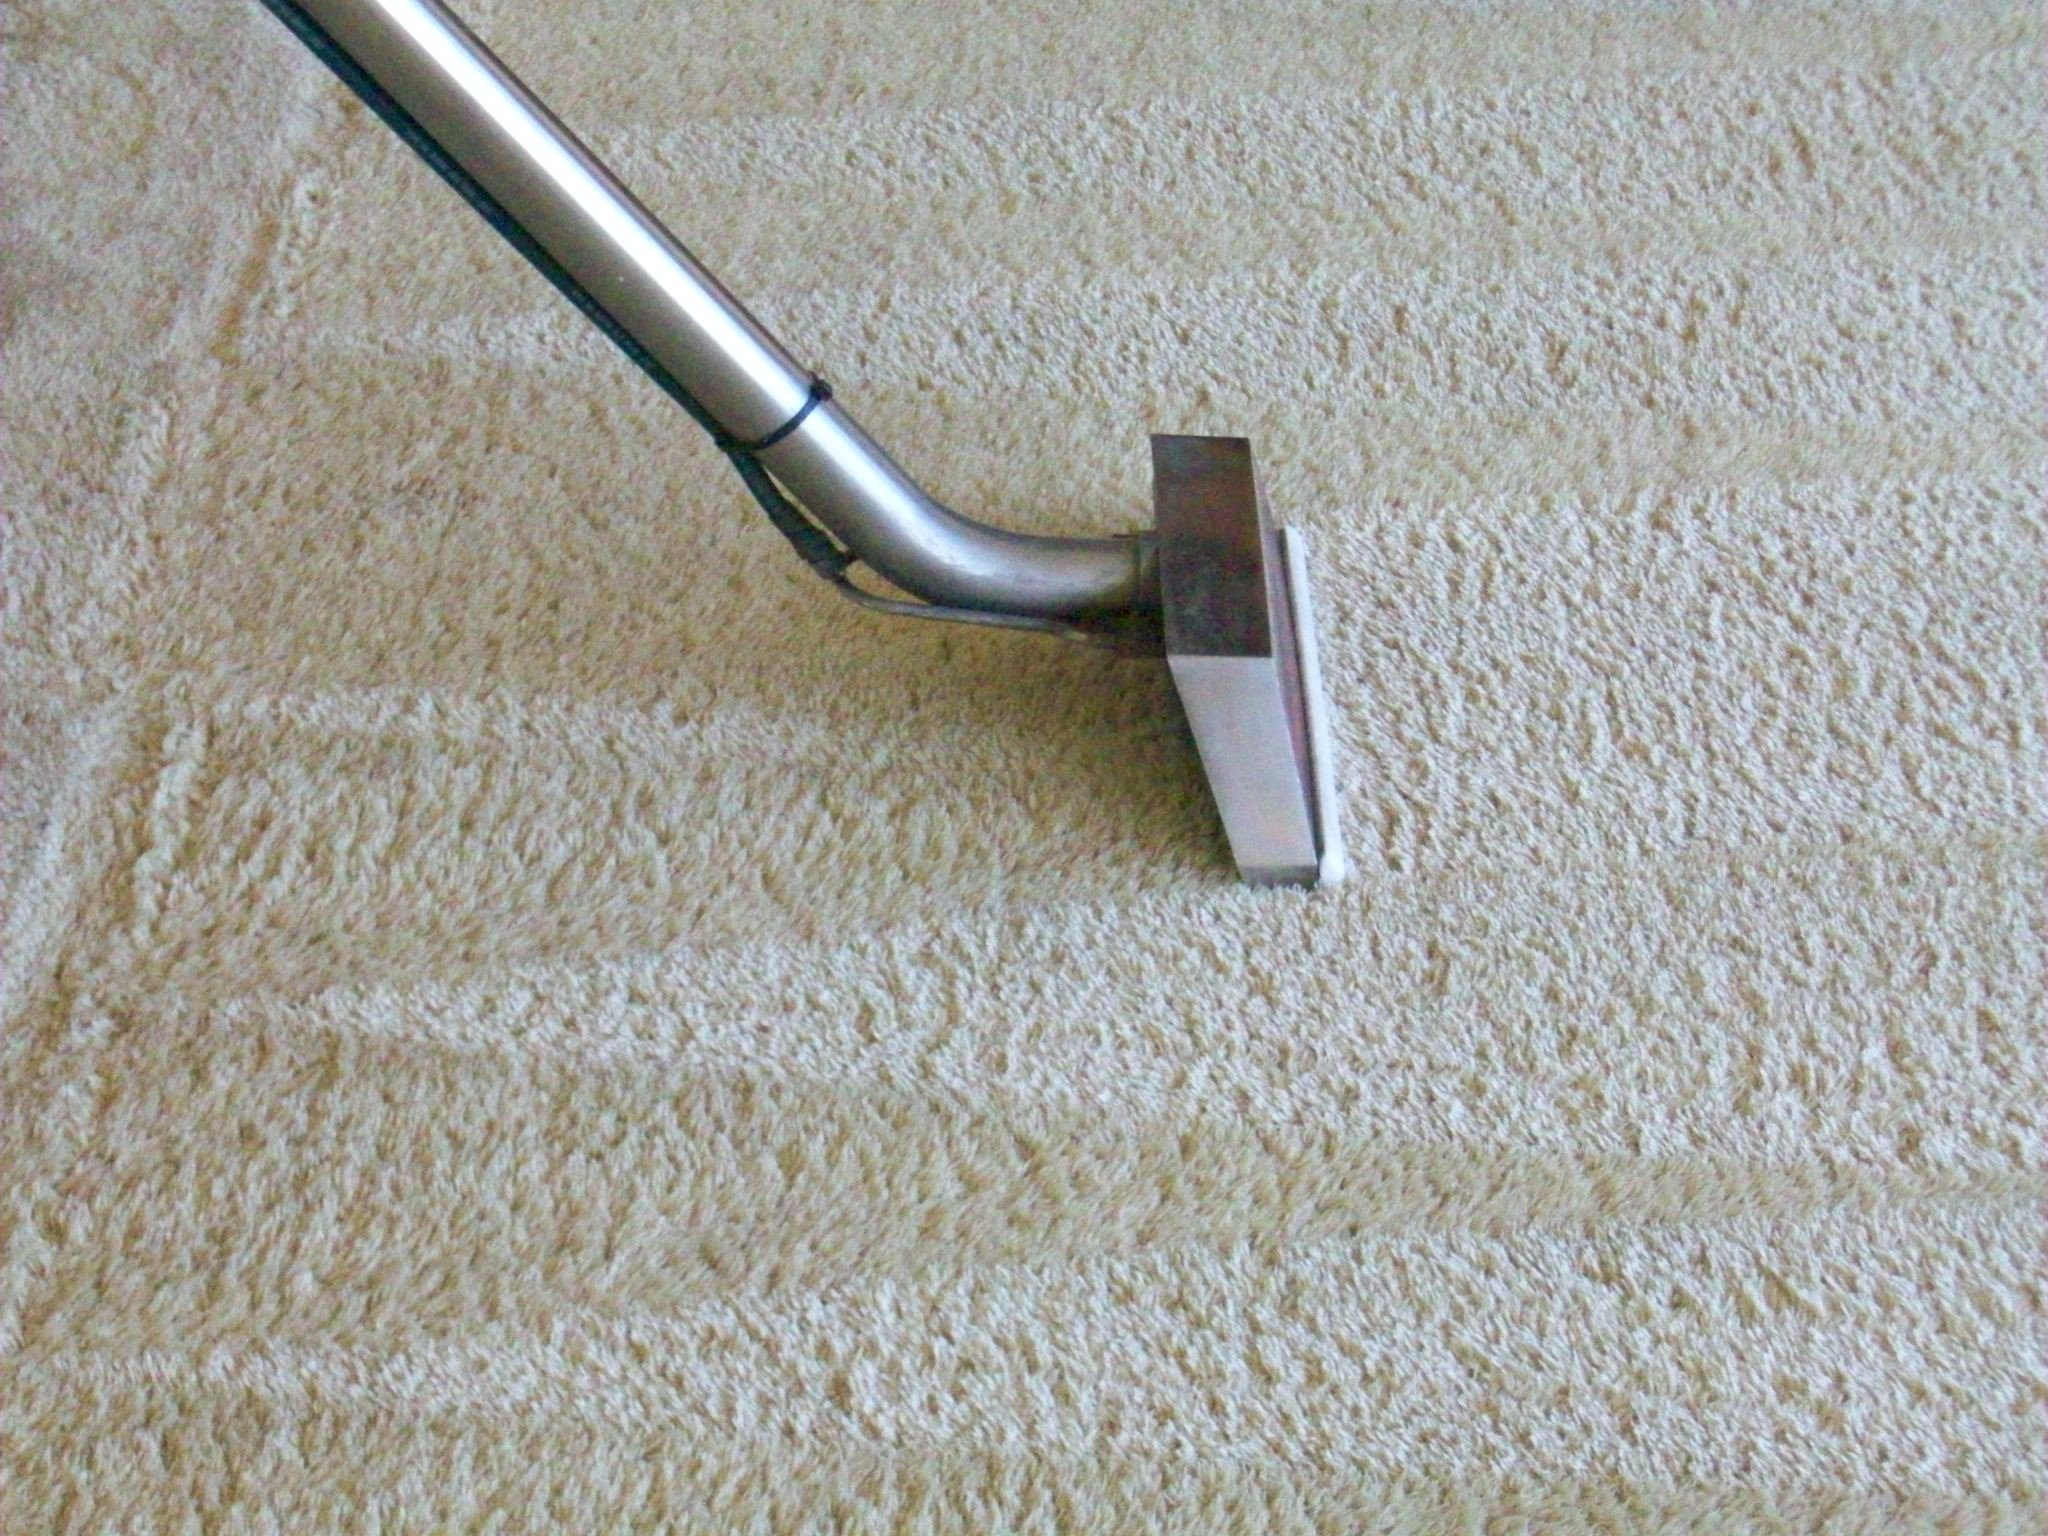 Carpet Mould Removal